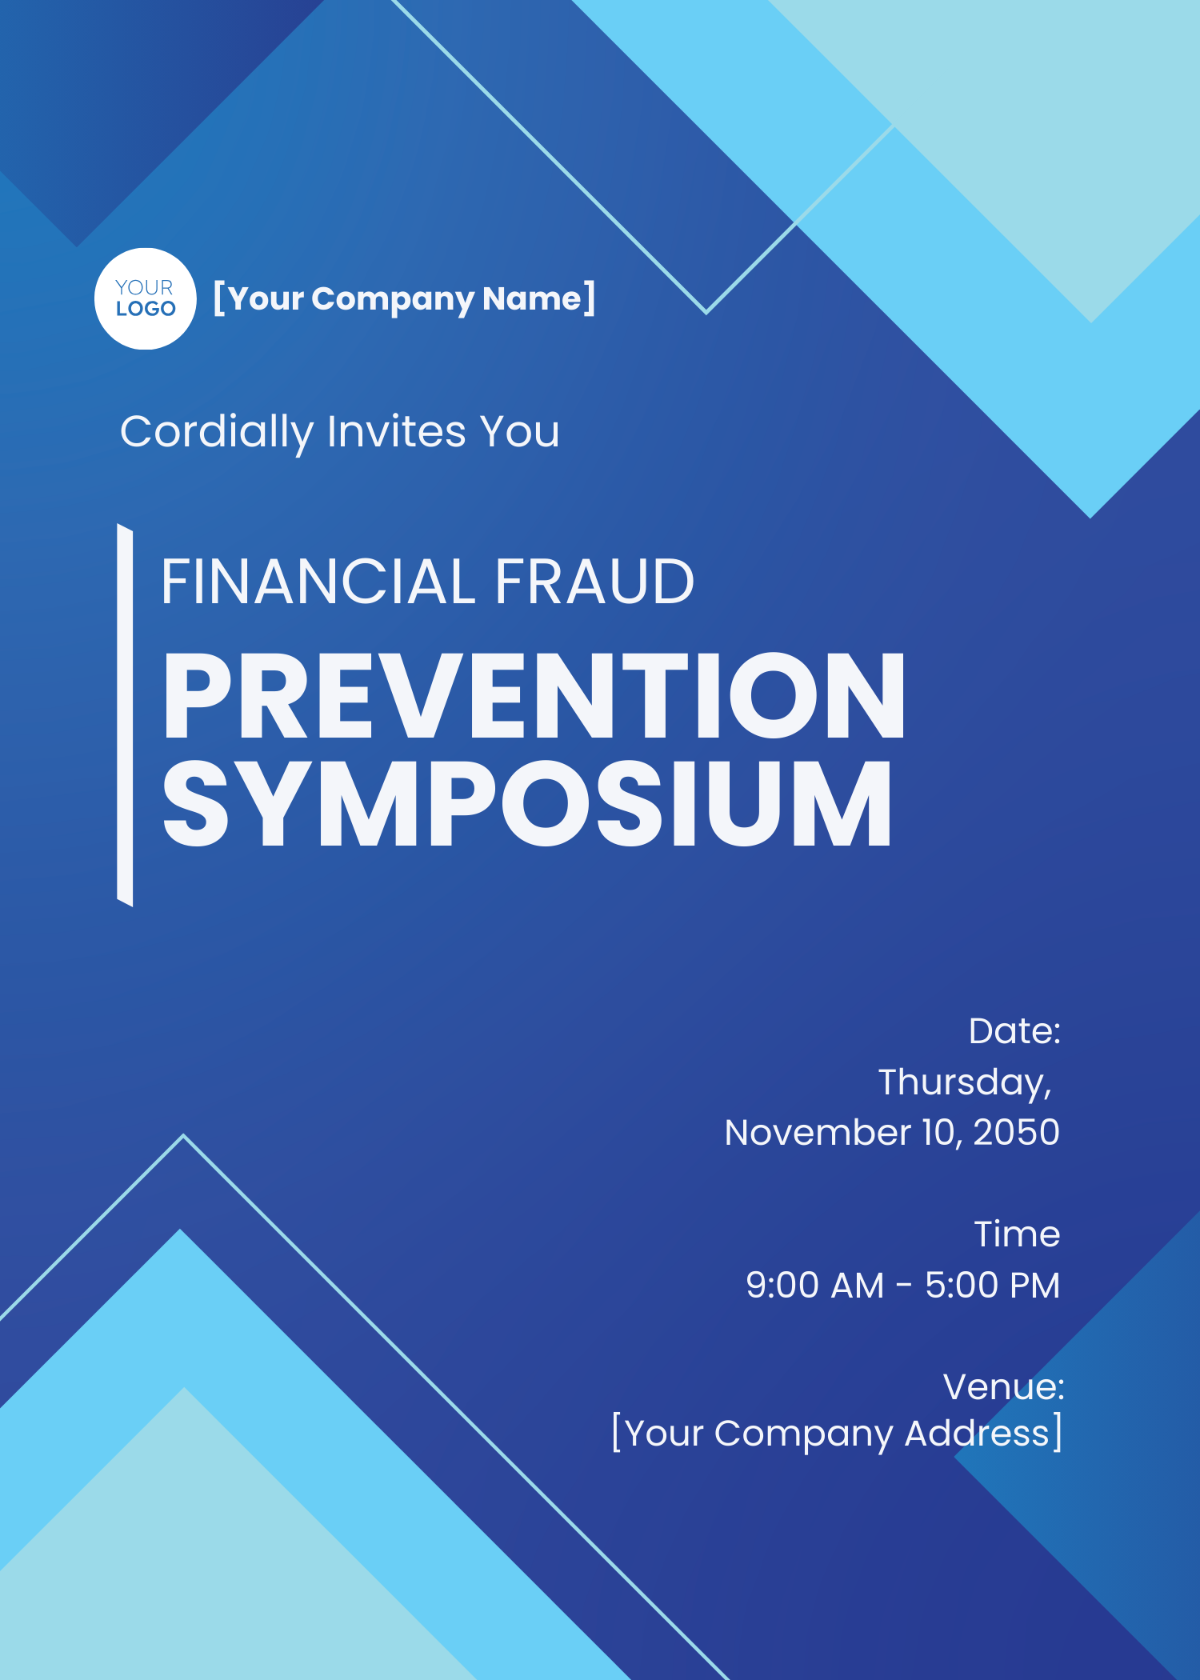 Financial Fraud Prevention Symposium Invitation Card Template